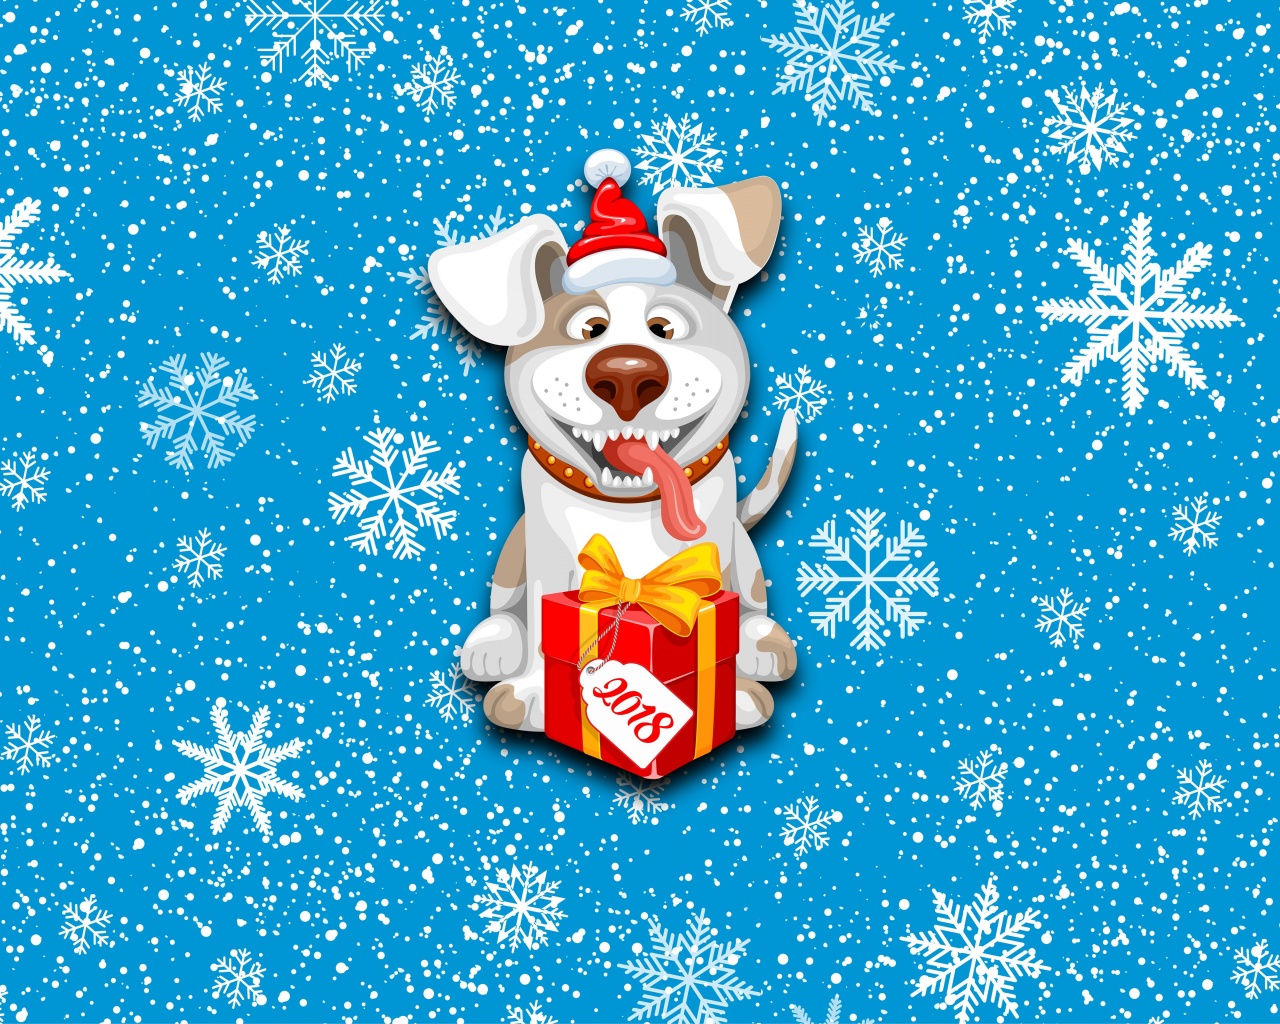 2018 New Year Snow Dog Cute